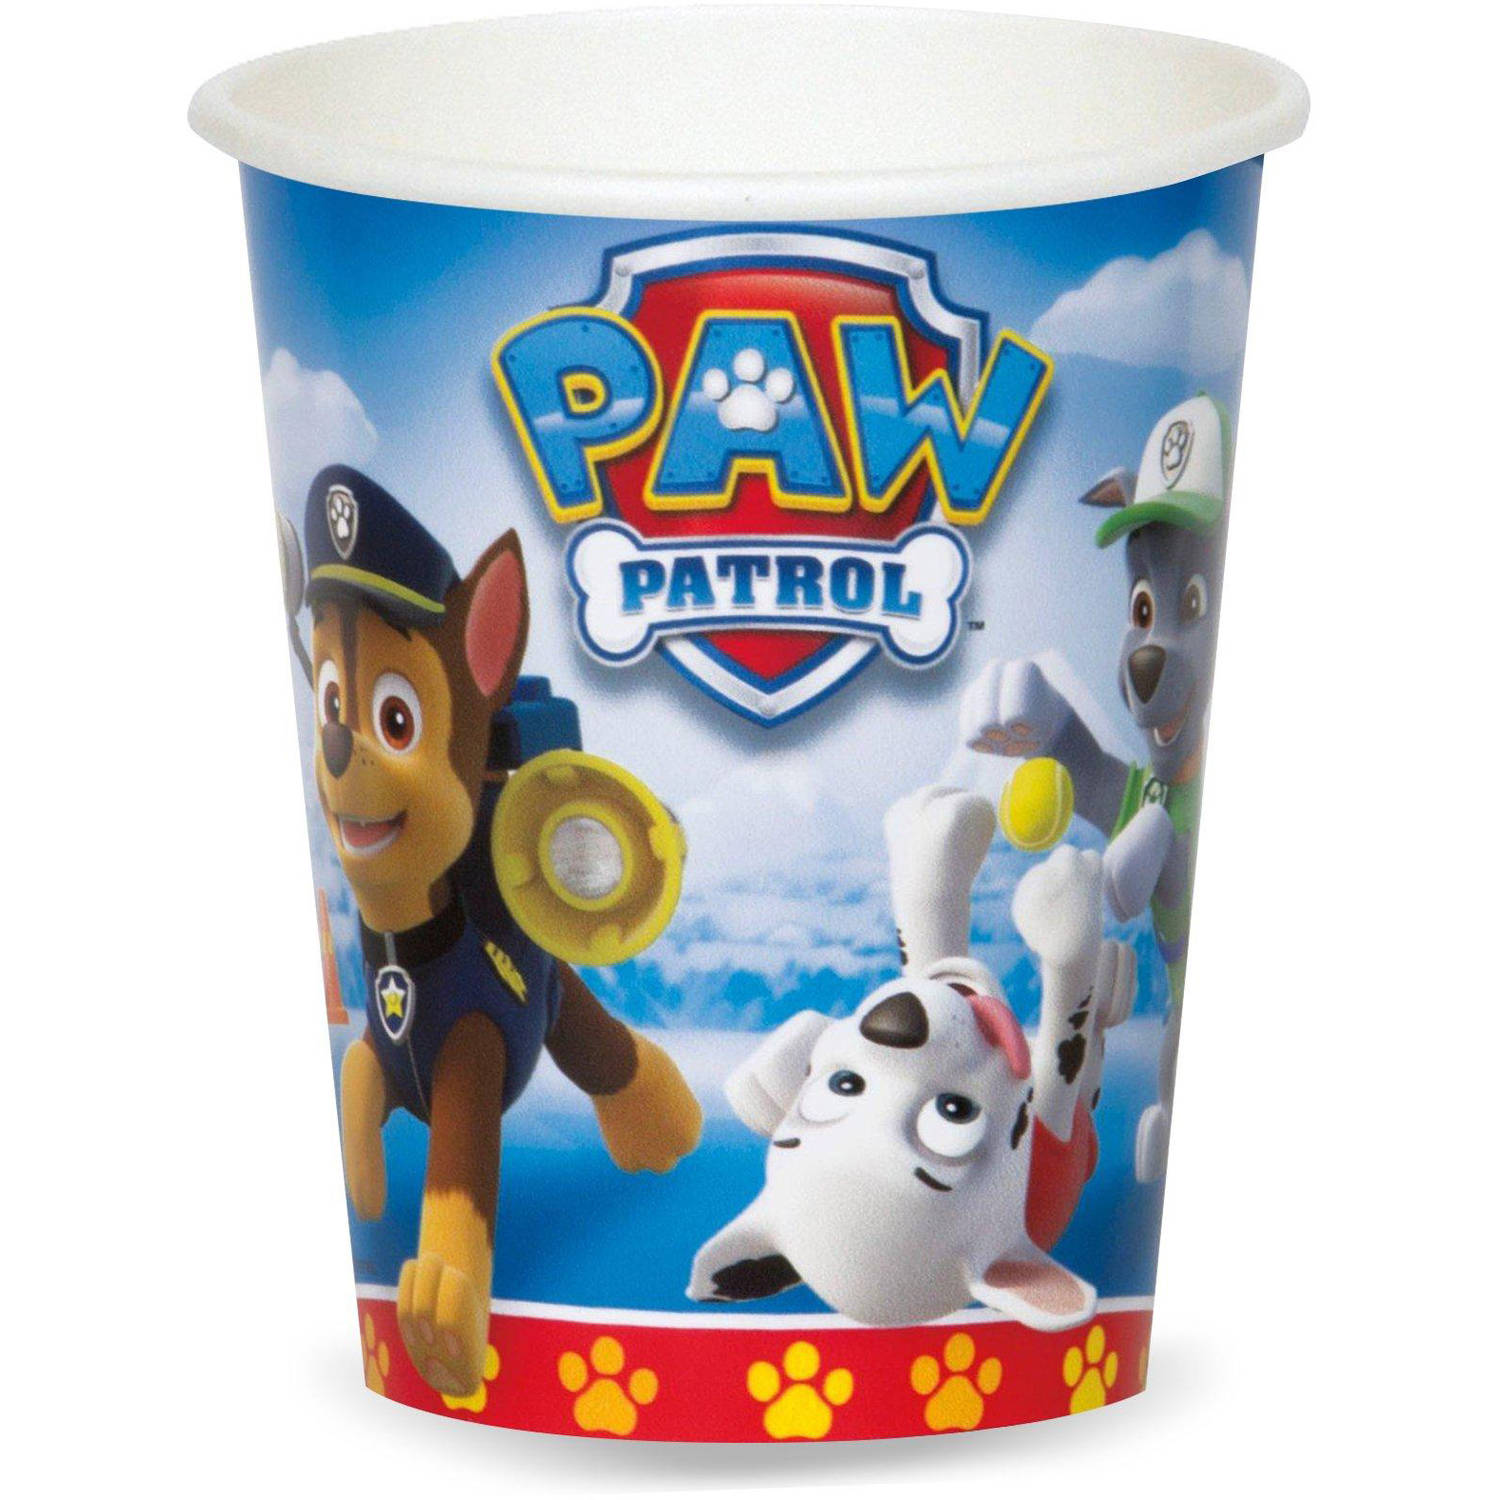 PAW Patrol 9 oz Paper Cups, 8pk - image 1 of 2